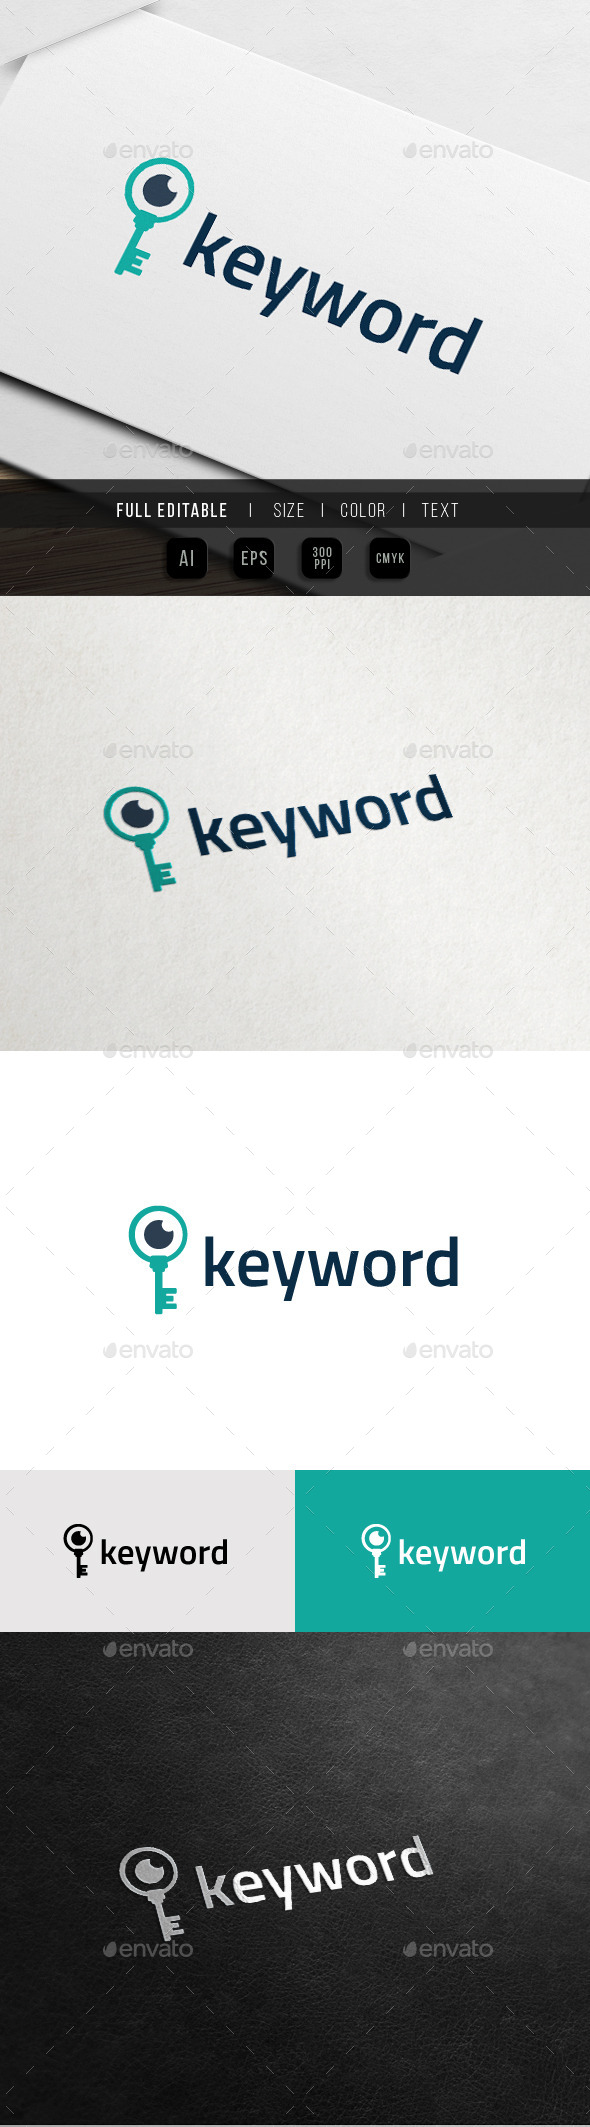 Search Keyword - SEO Expert - Key Eye Logo